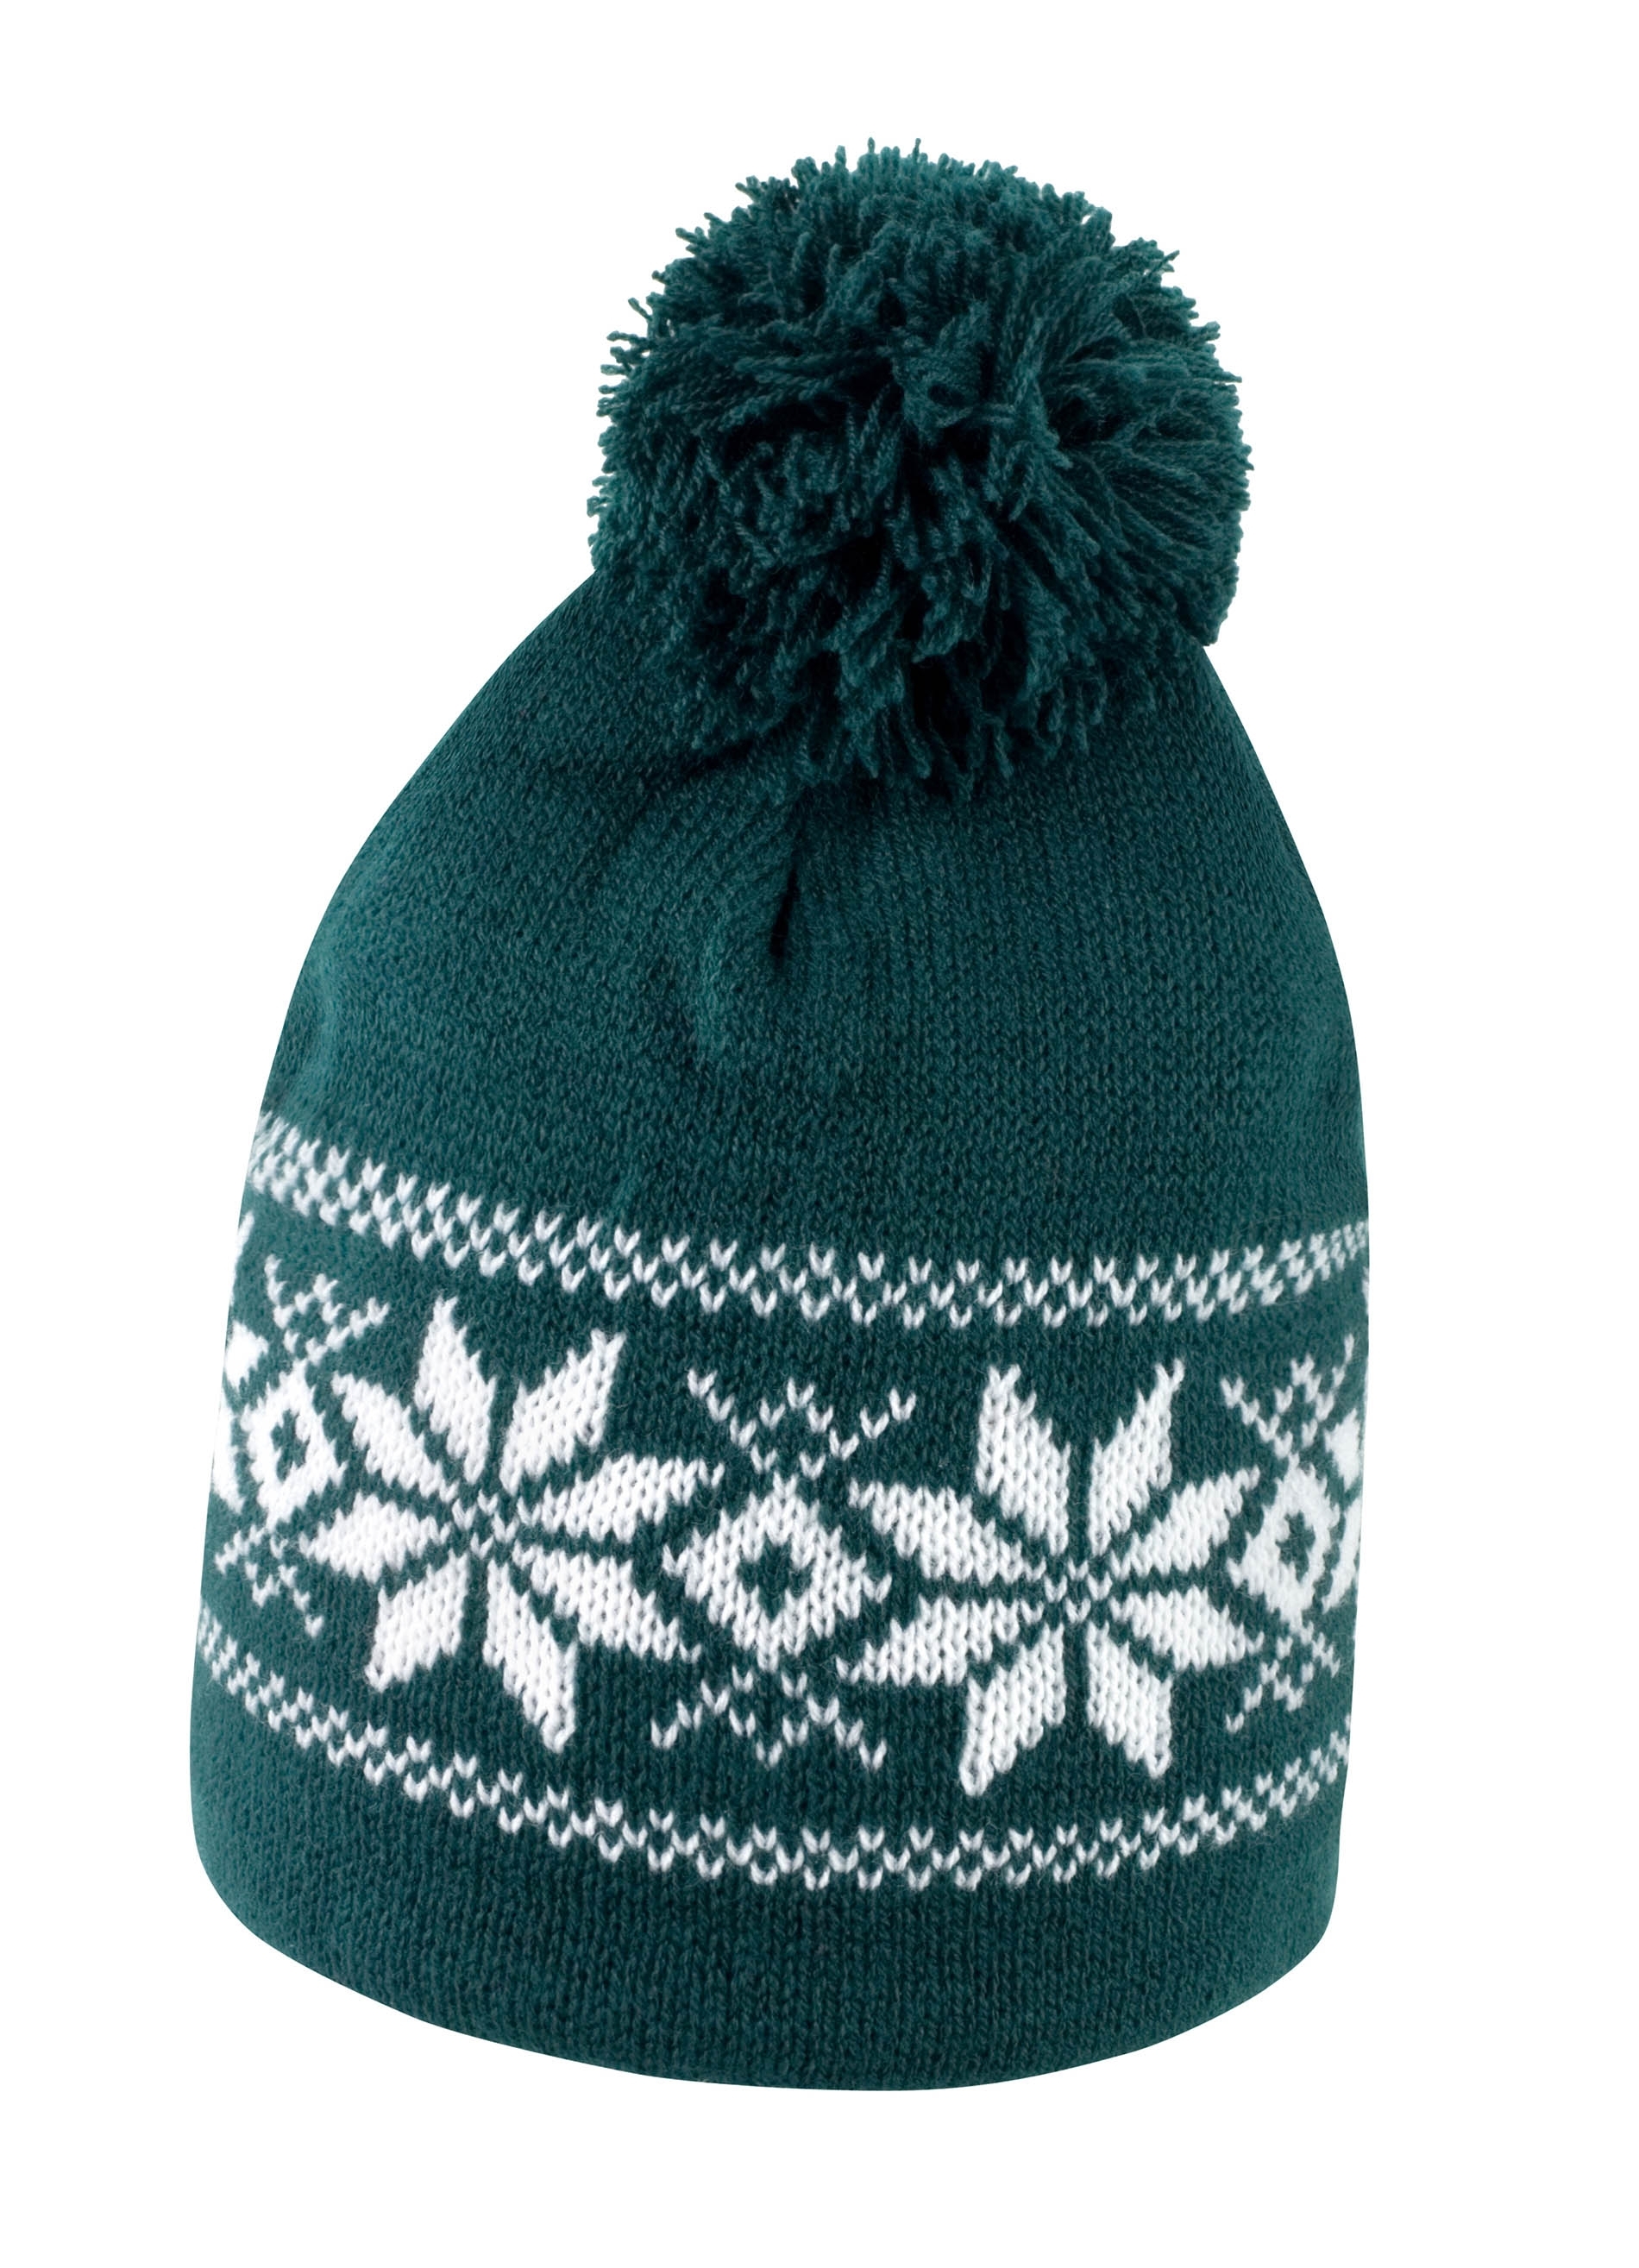 Fair Isles Knitted Hat Arctic Green/White Vert